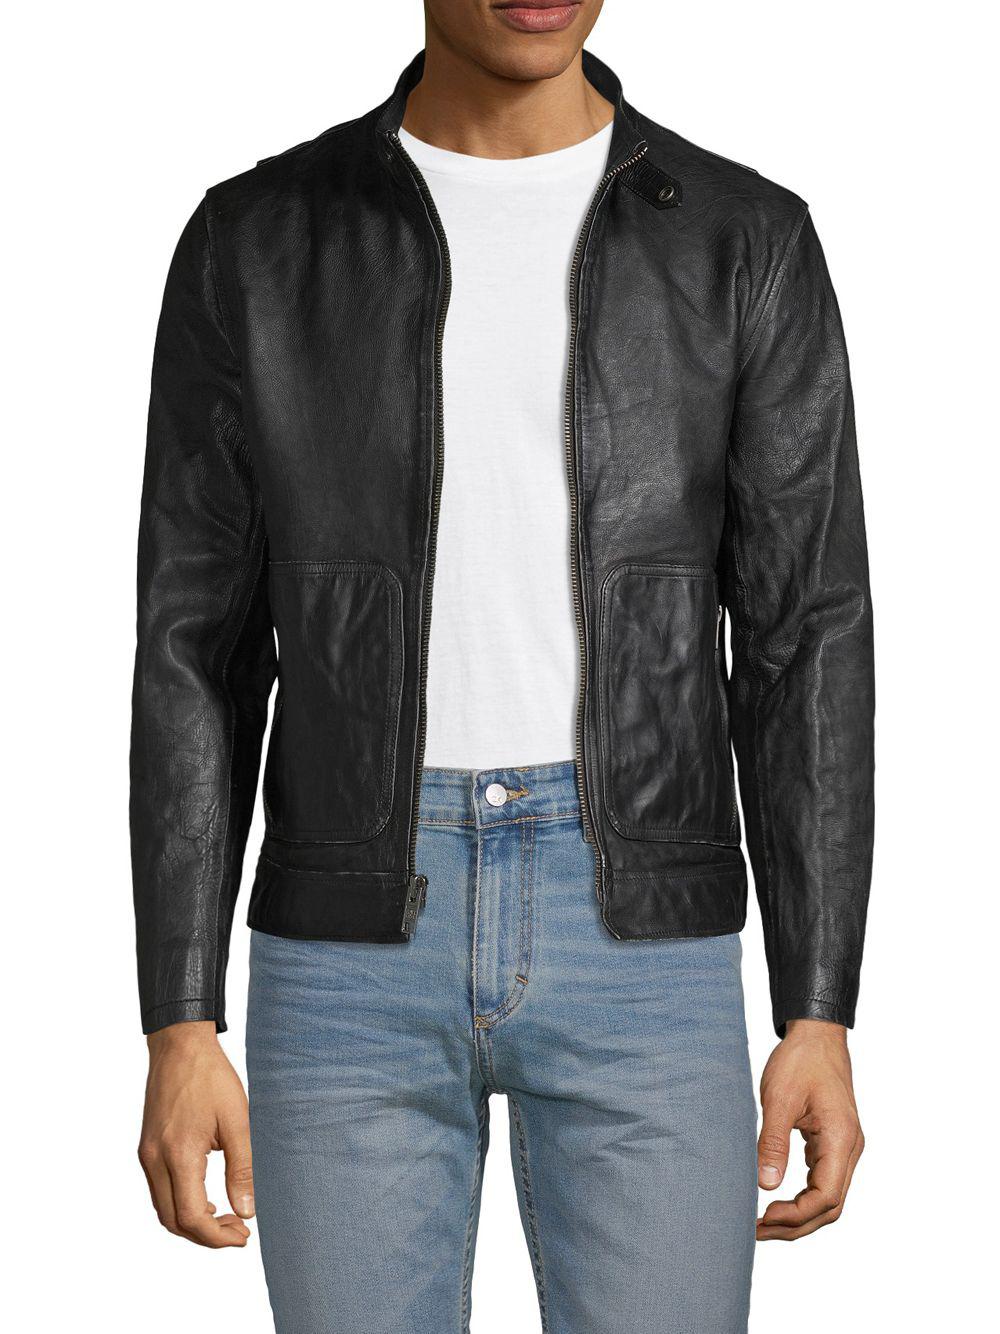 Lyst - Frye Textured Leather Jacket in Black for Men